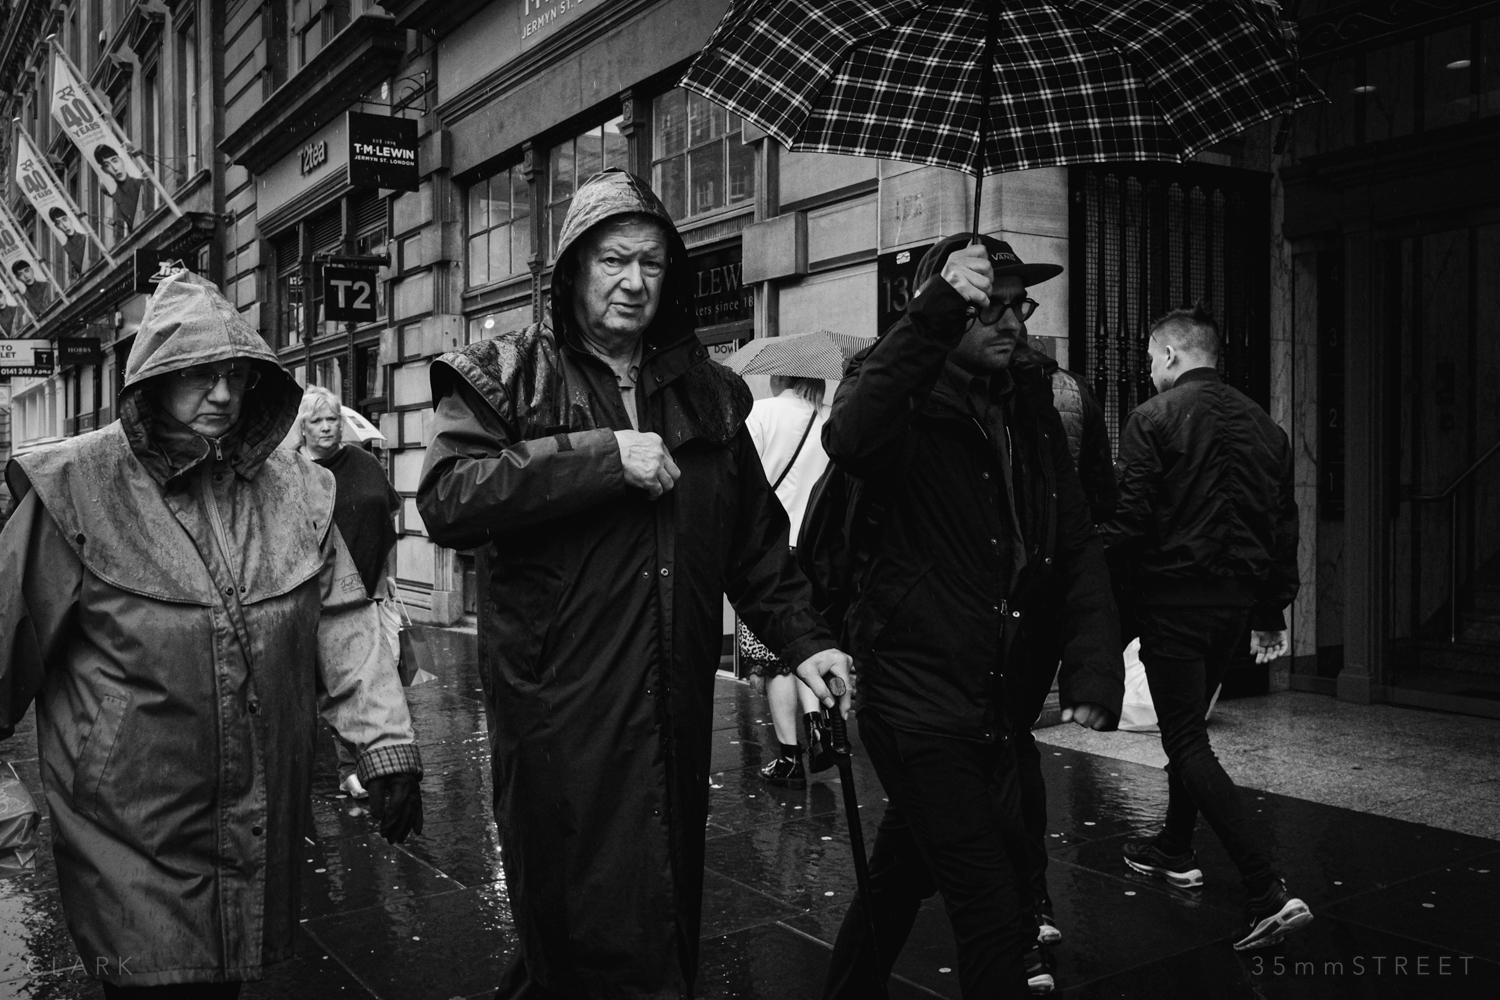 005_35mmStreet-Rainy-Friday-Glasgow.jpg